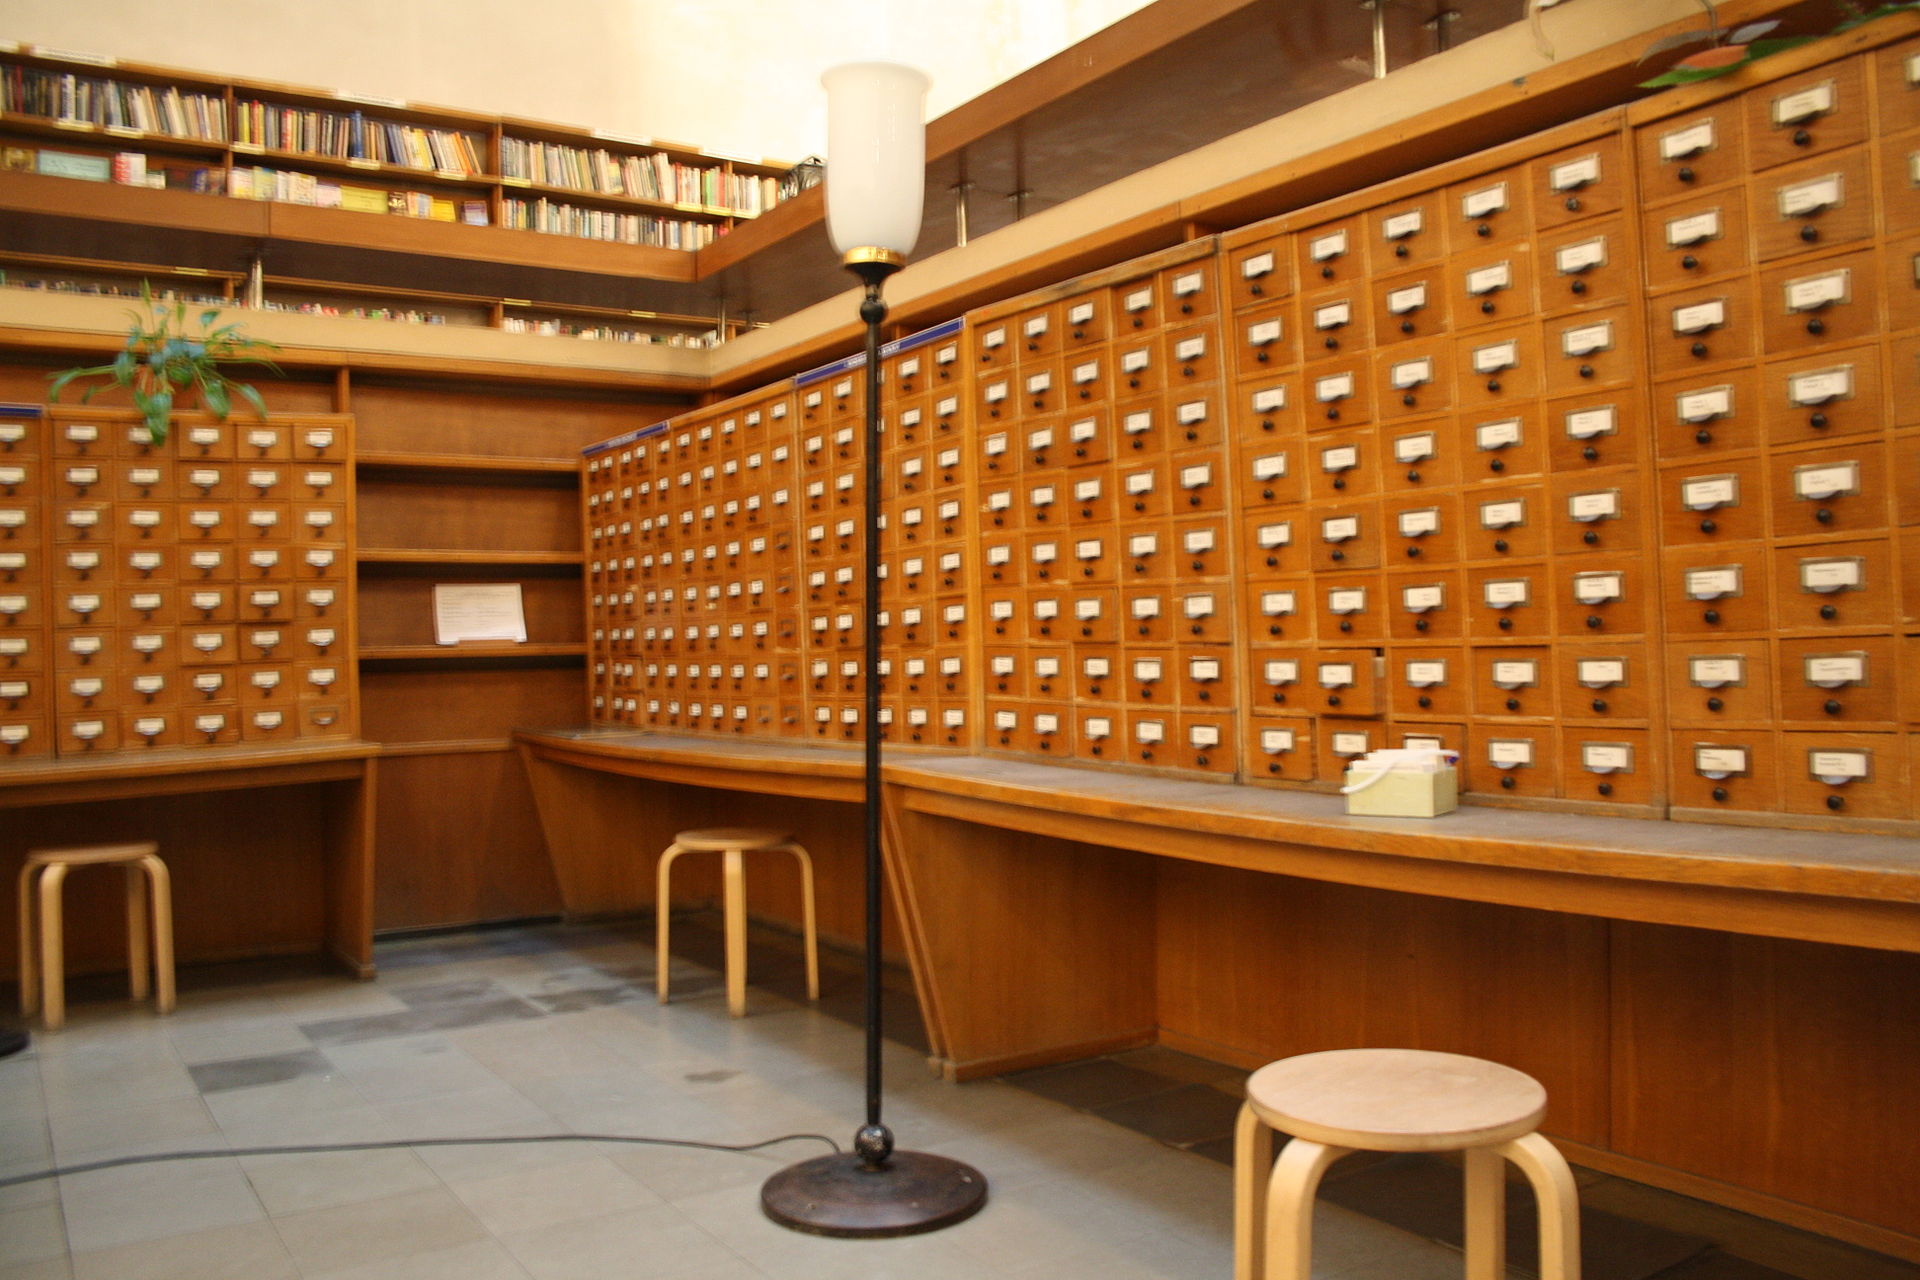 Vyborg_Library_Interior_3